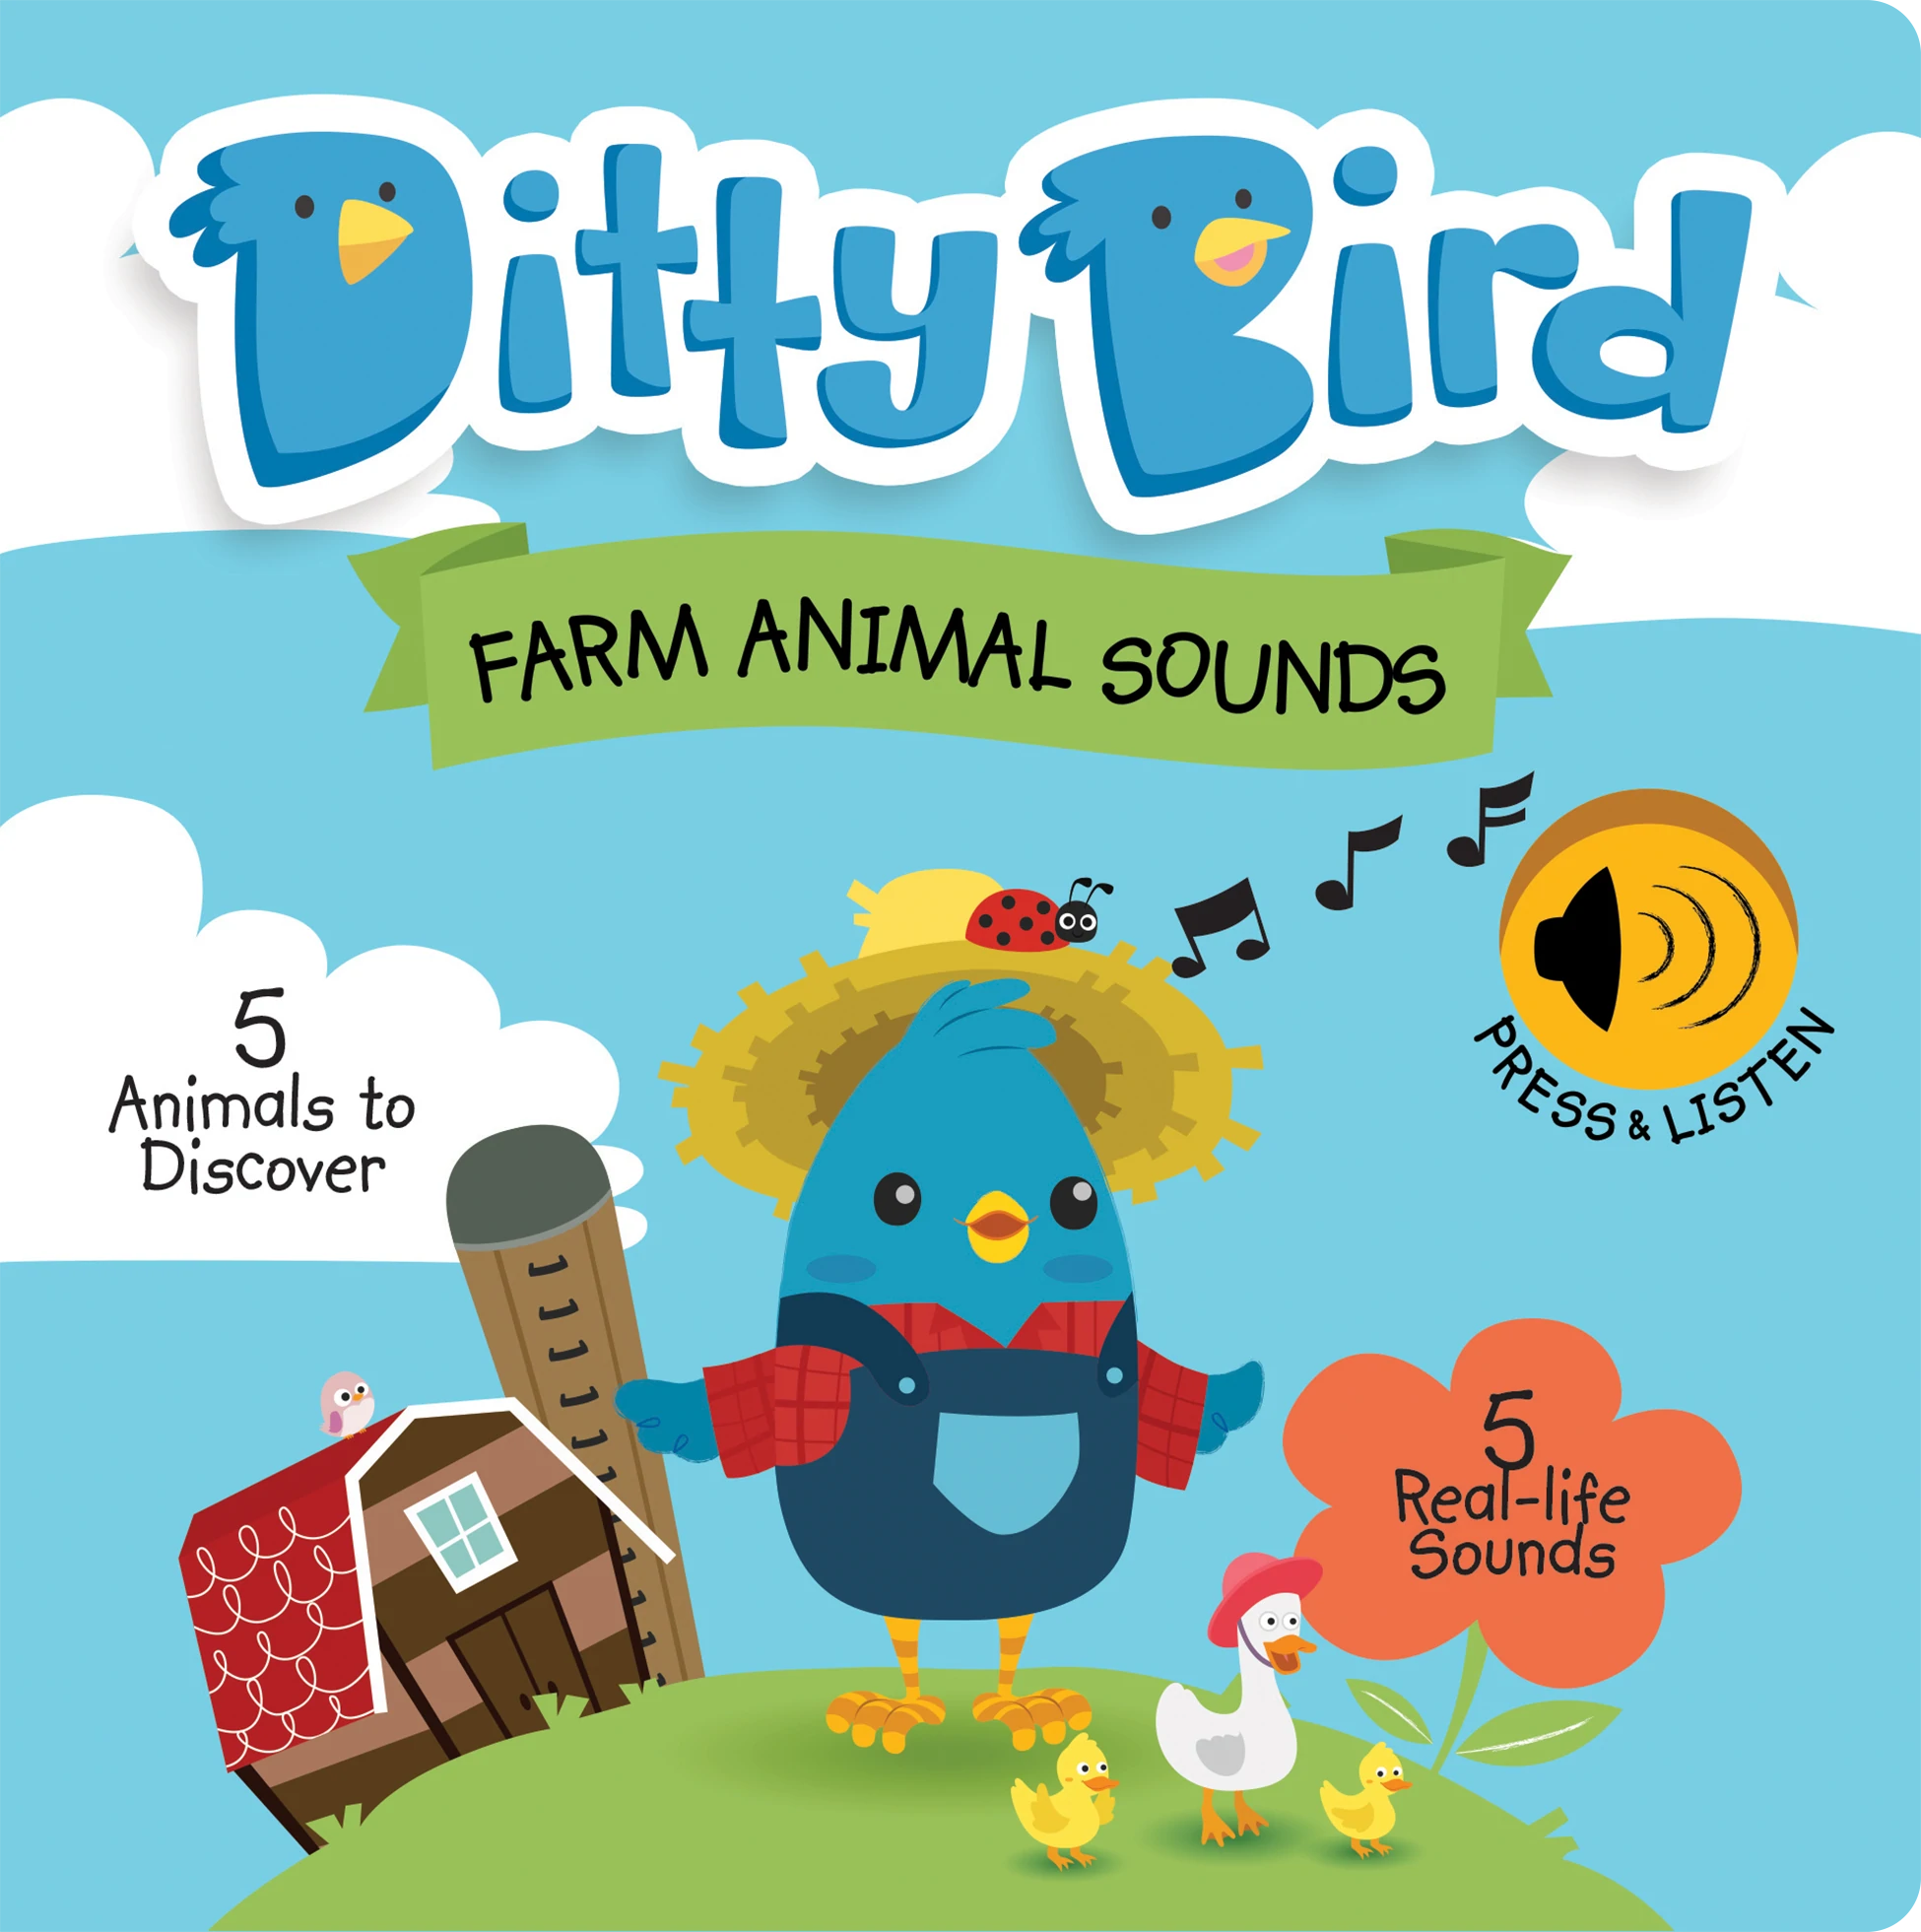 Farm Animal Sounds by Ditty Bird